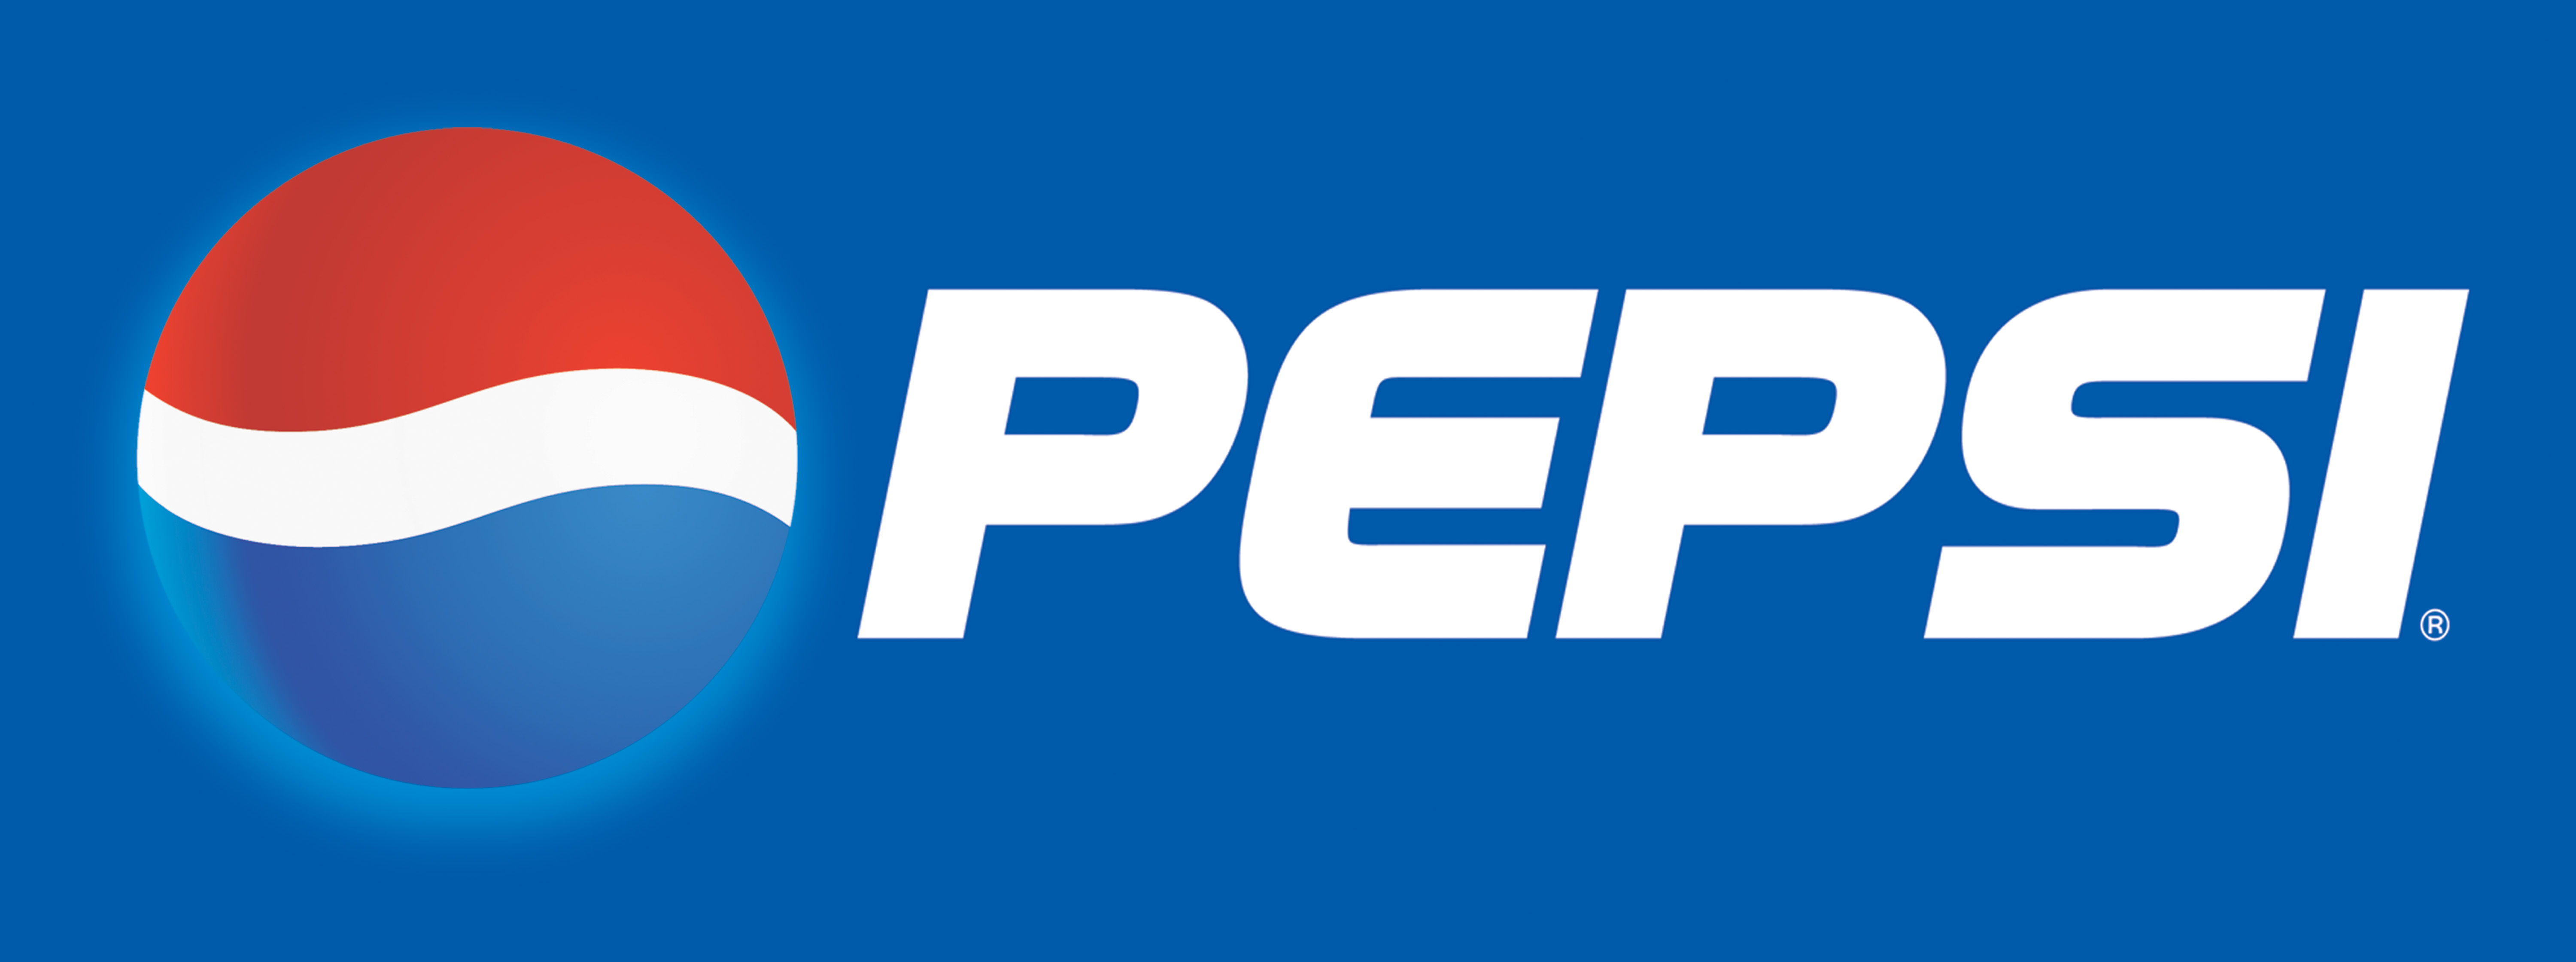 Pepsi Logo HD Wallpaper Pictures